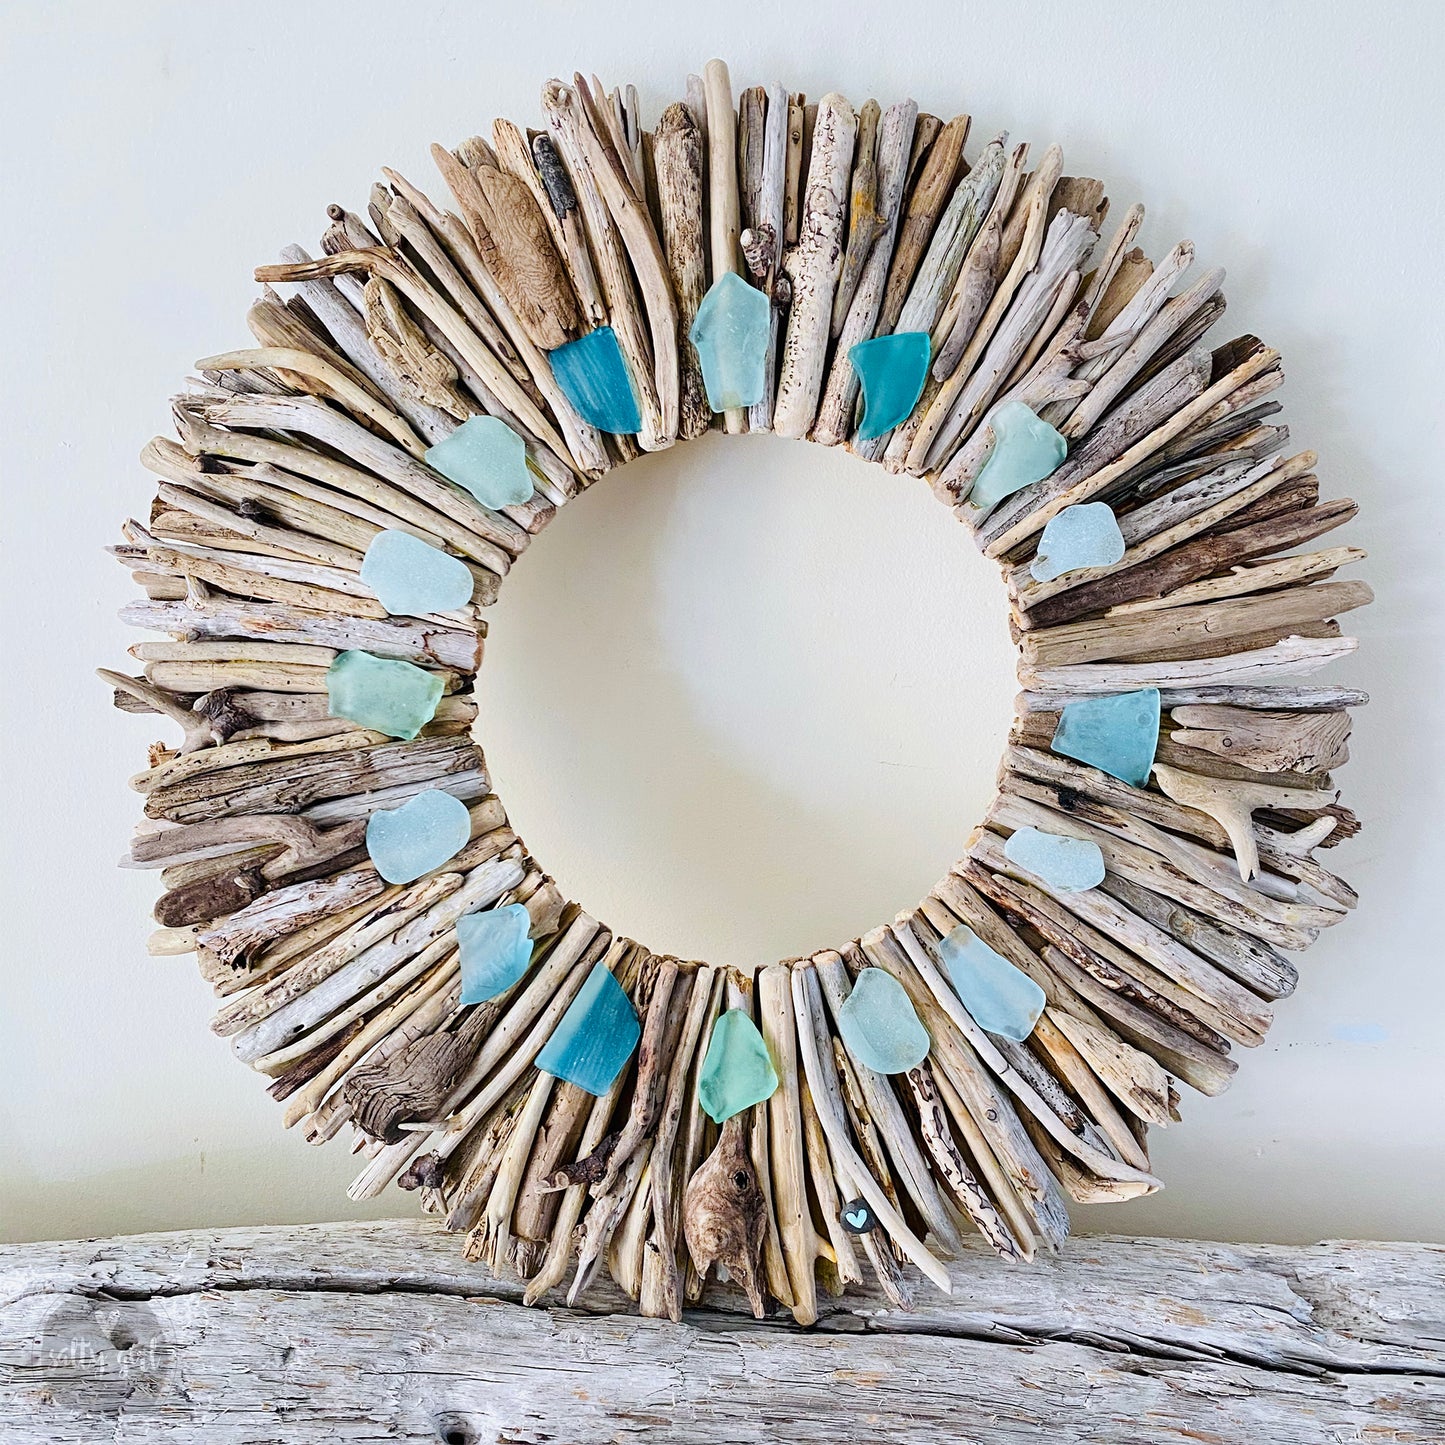 Driftwood Wreath with Shades of Aqua Sea Glass - Sizes 12" - 16" - 20”